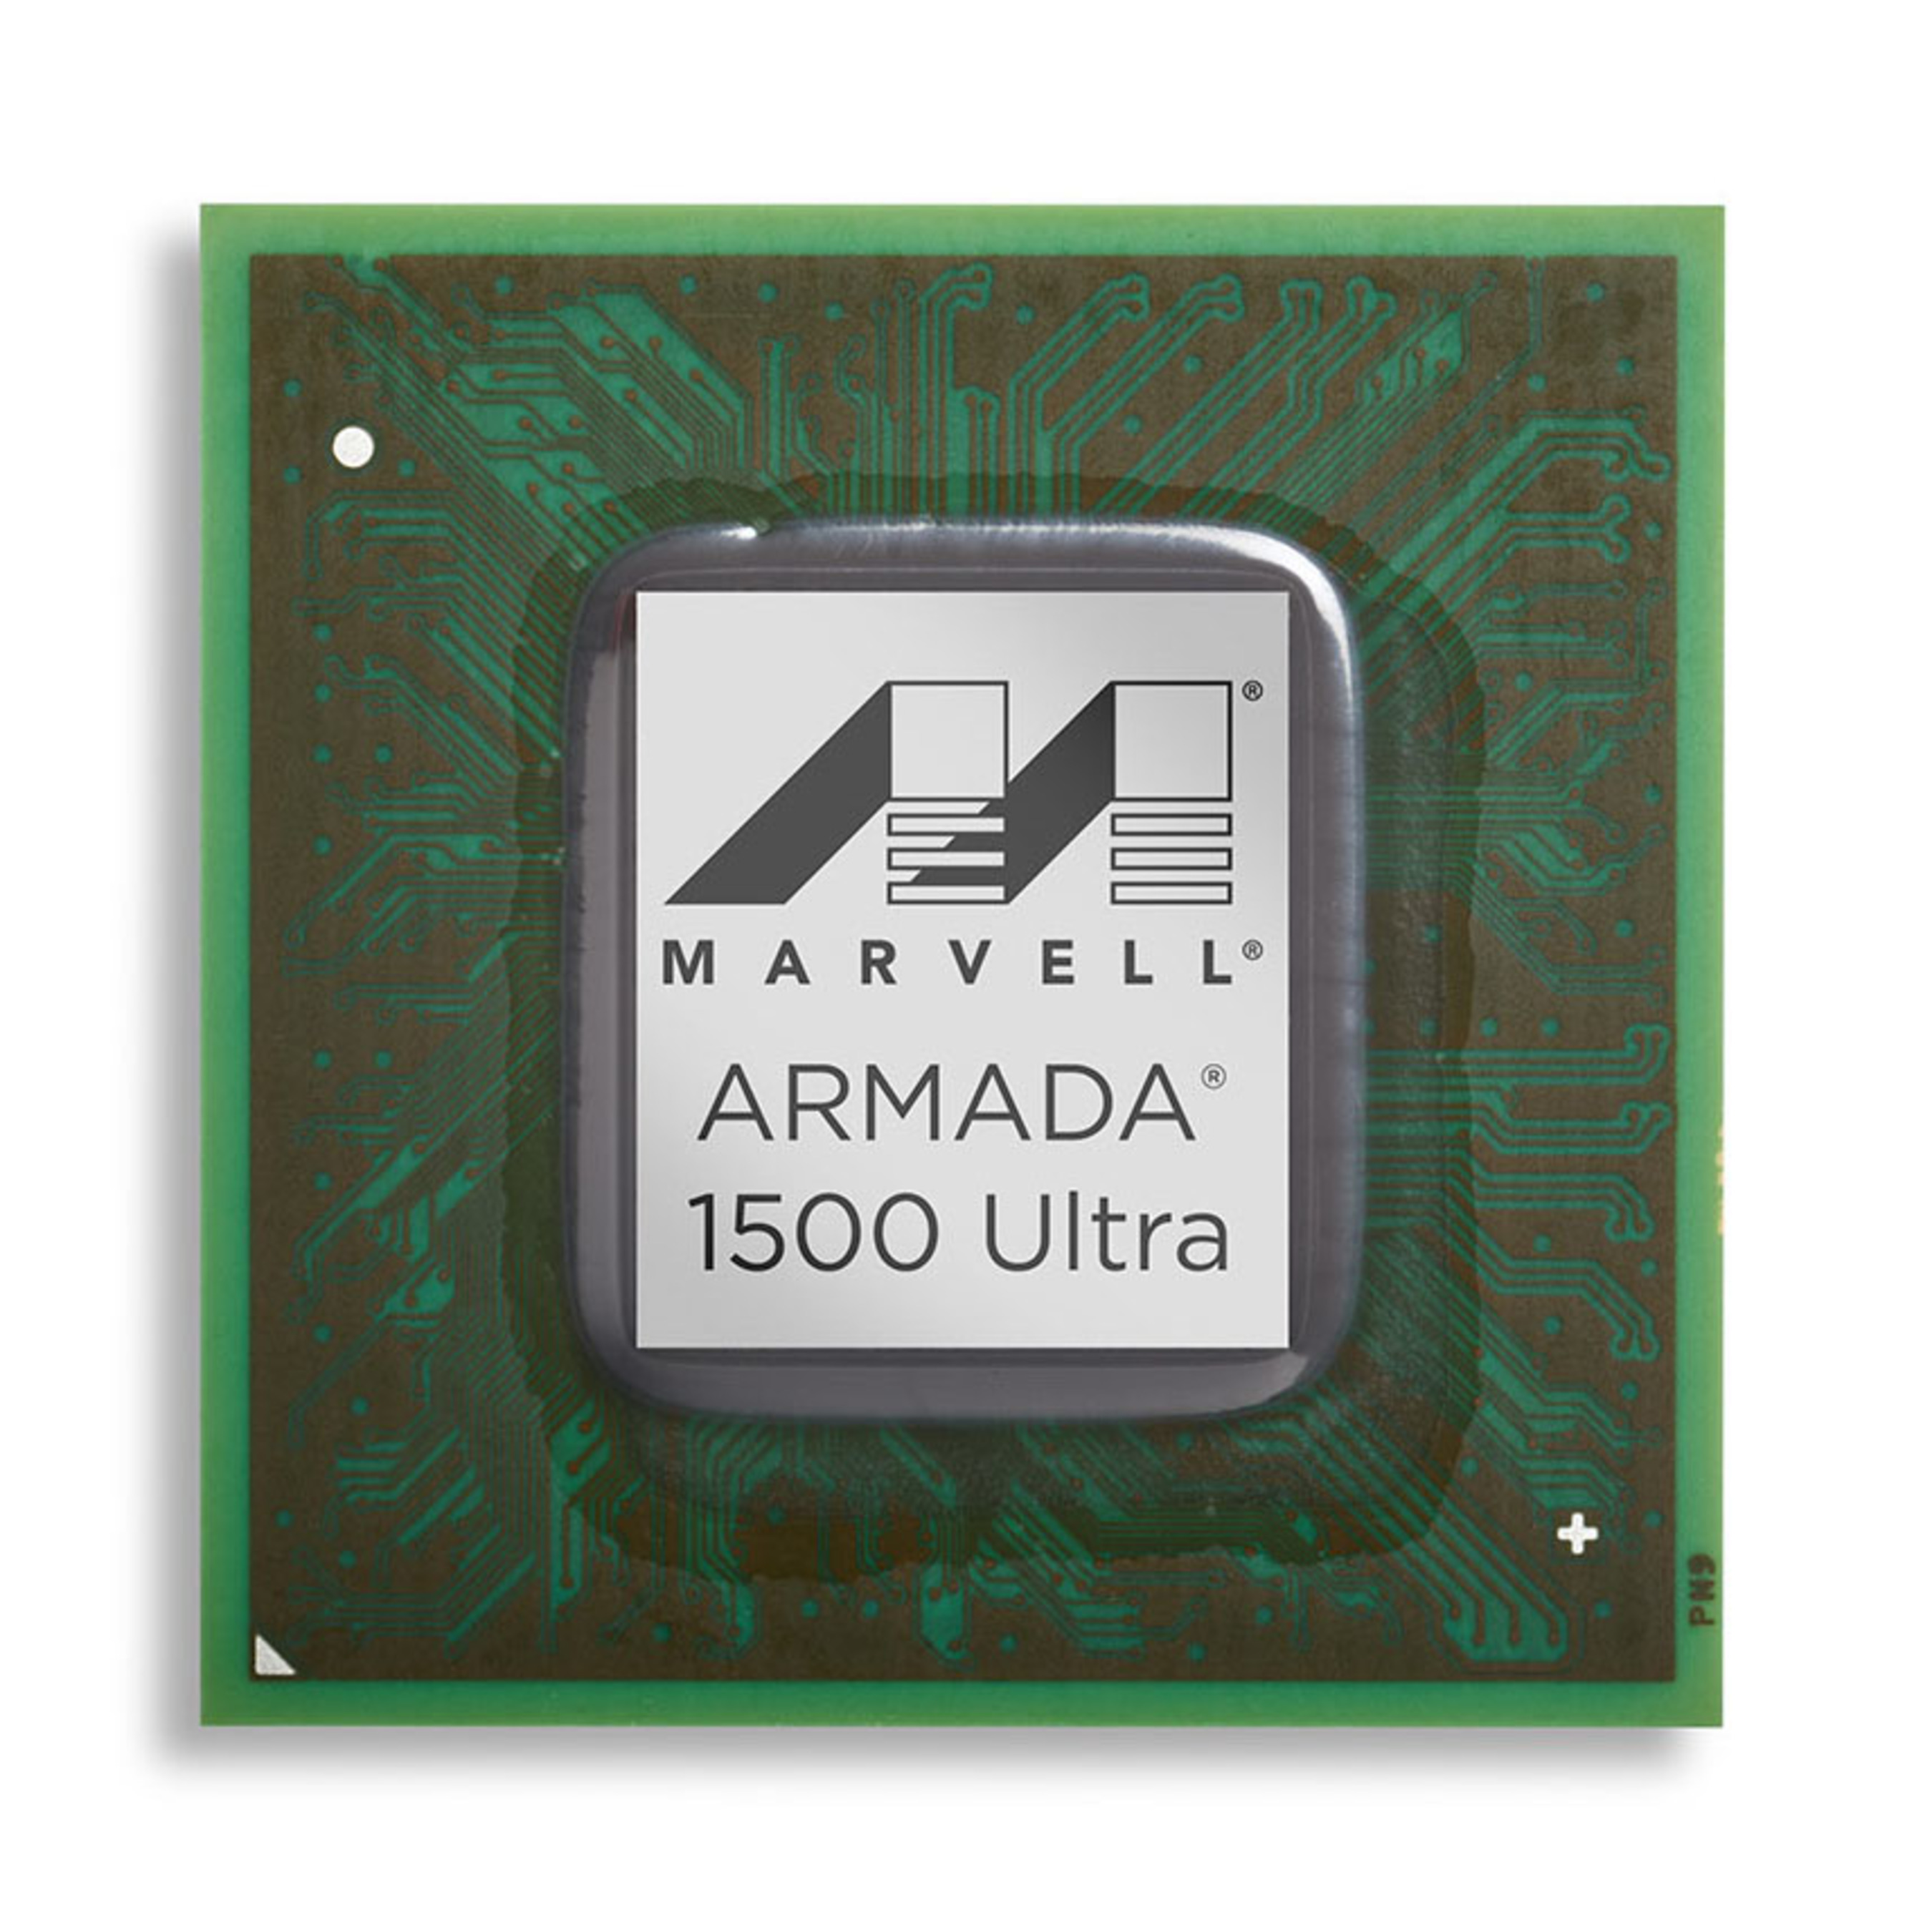 Marvell's ARMADA 1500 Ultra